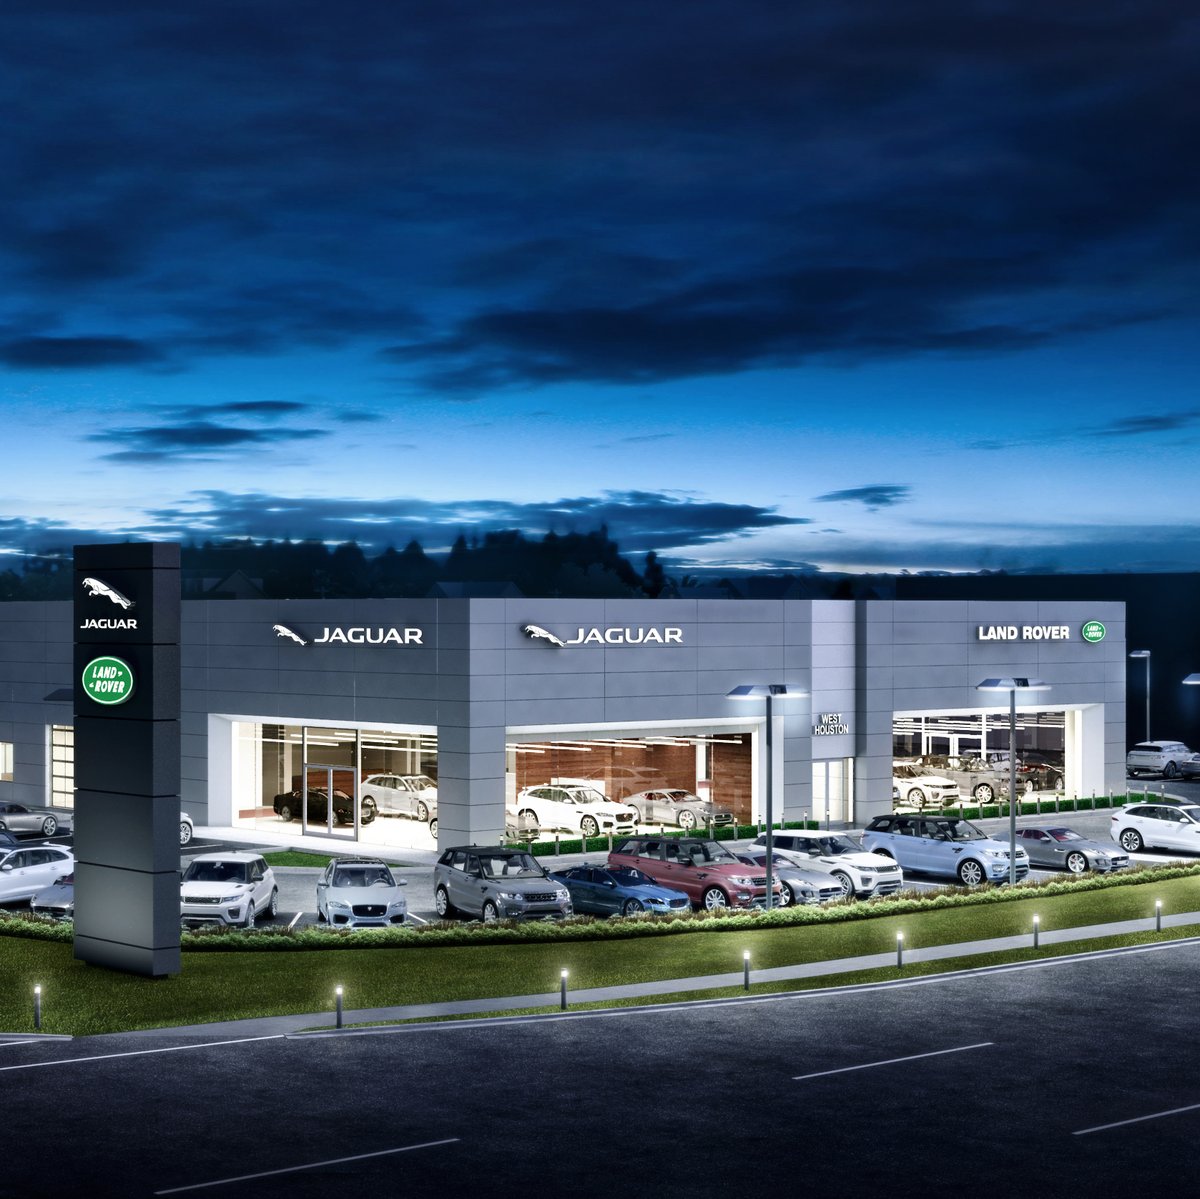 Jaguar-Land Rover dealership to open in west Houston in 2019 - Houston  Business Journal